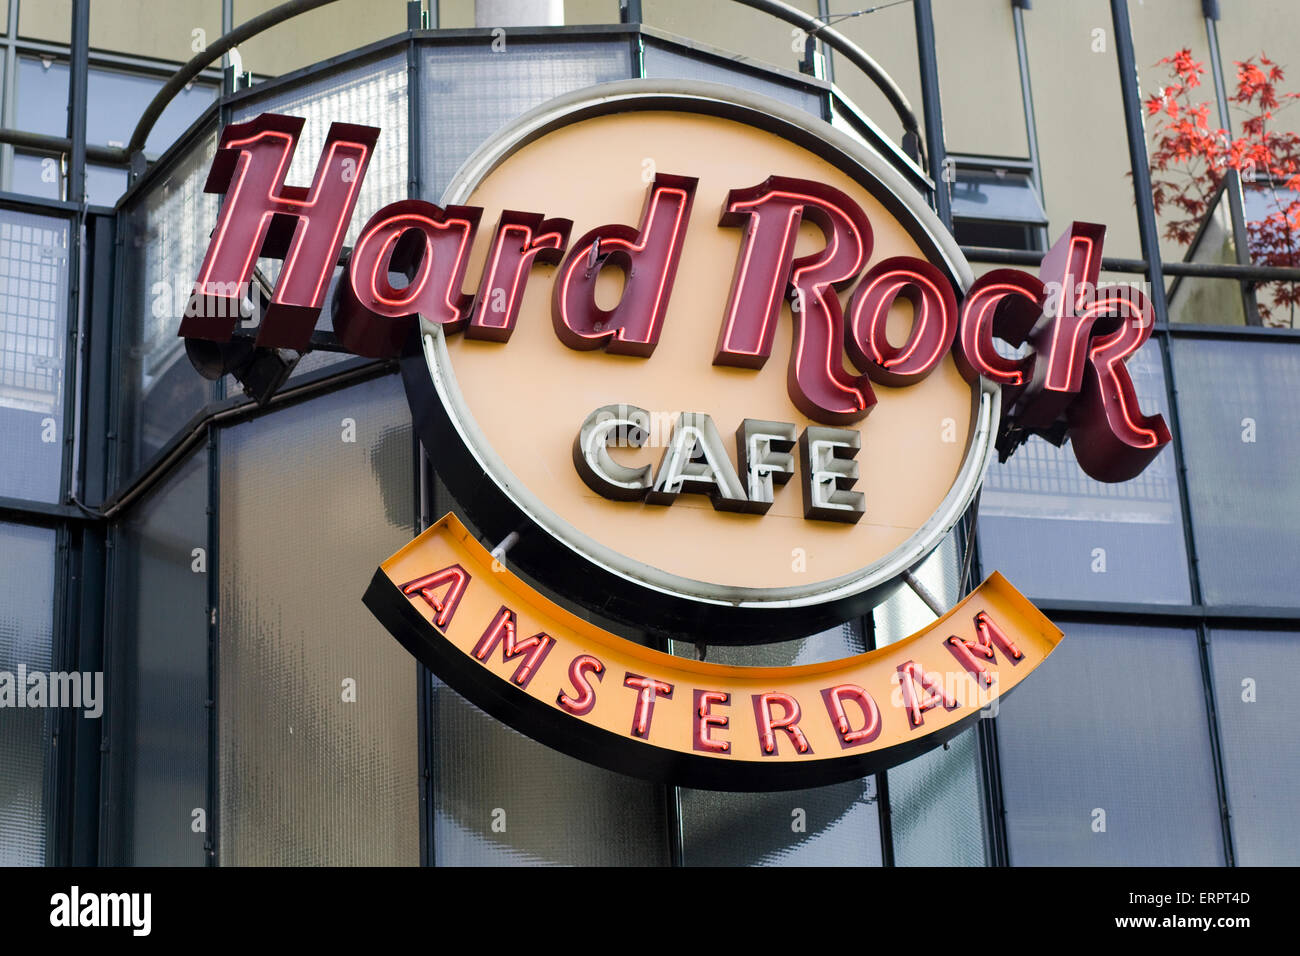 Hard rock cafe amsterdam fotografías e imágenes de alta resolución - Alamy